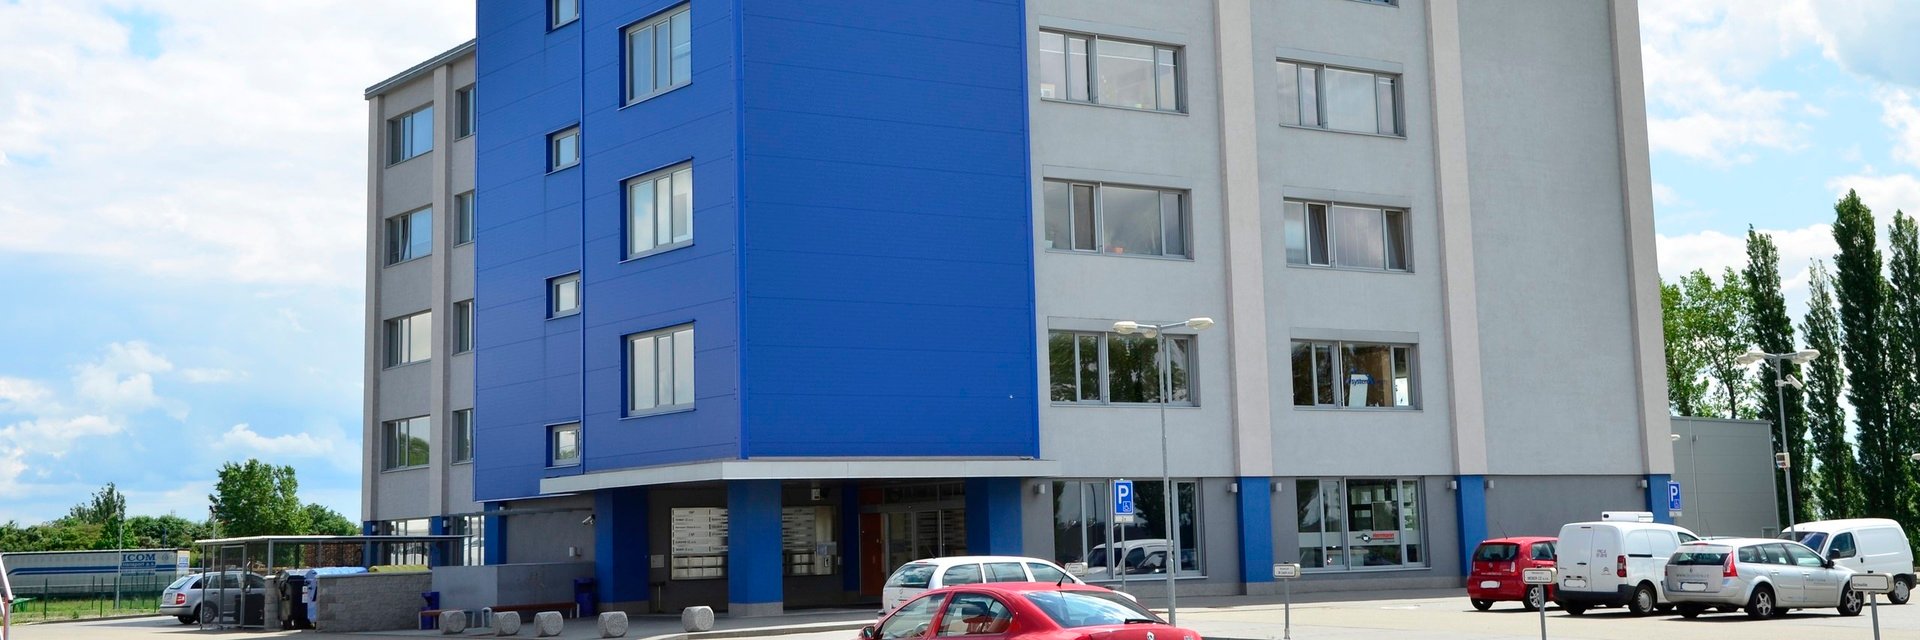 Pronájem kanceláře 75 m², ulice Tuřanka, Brno - Slatina